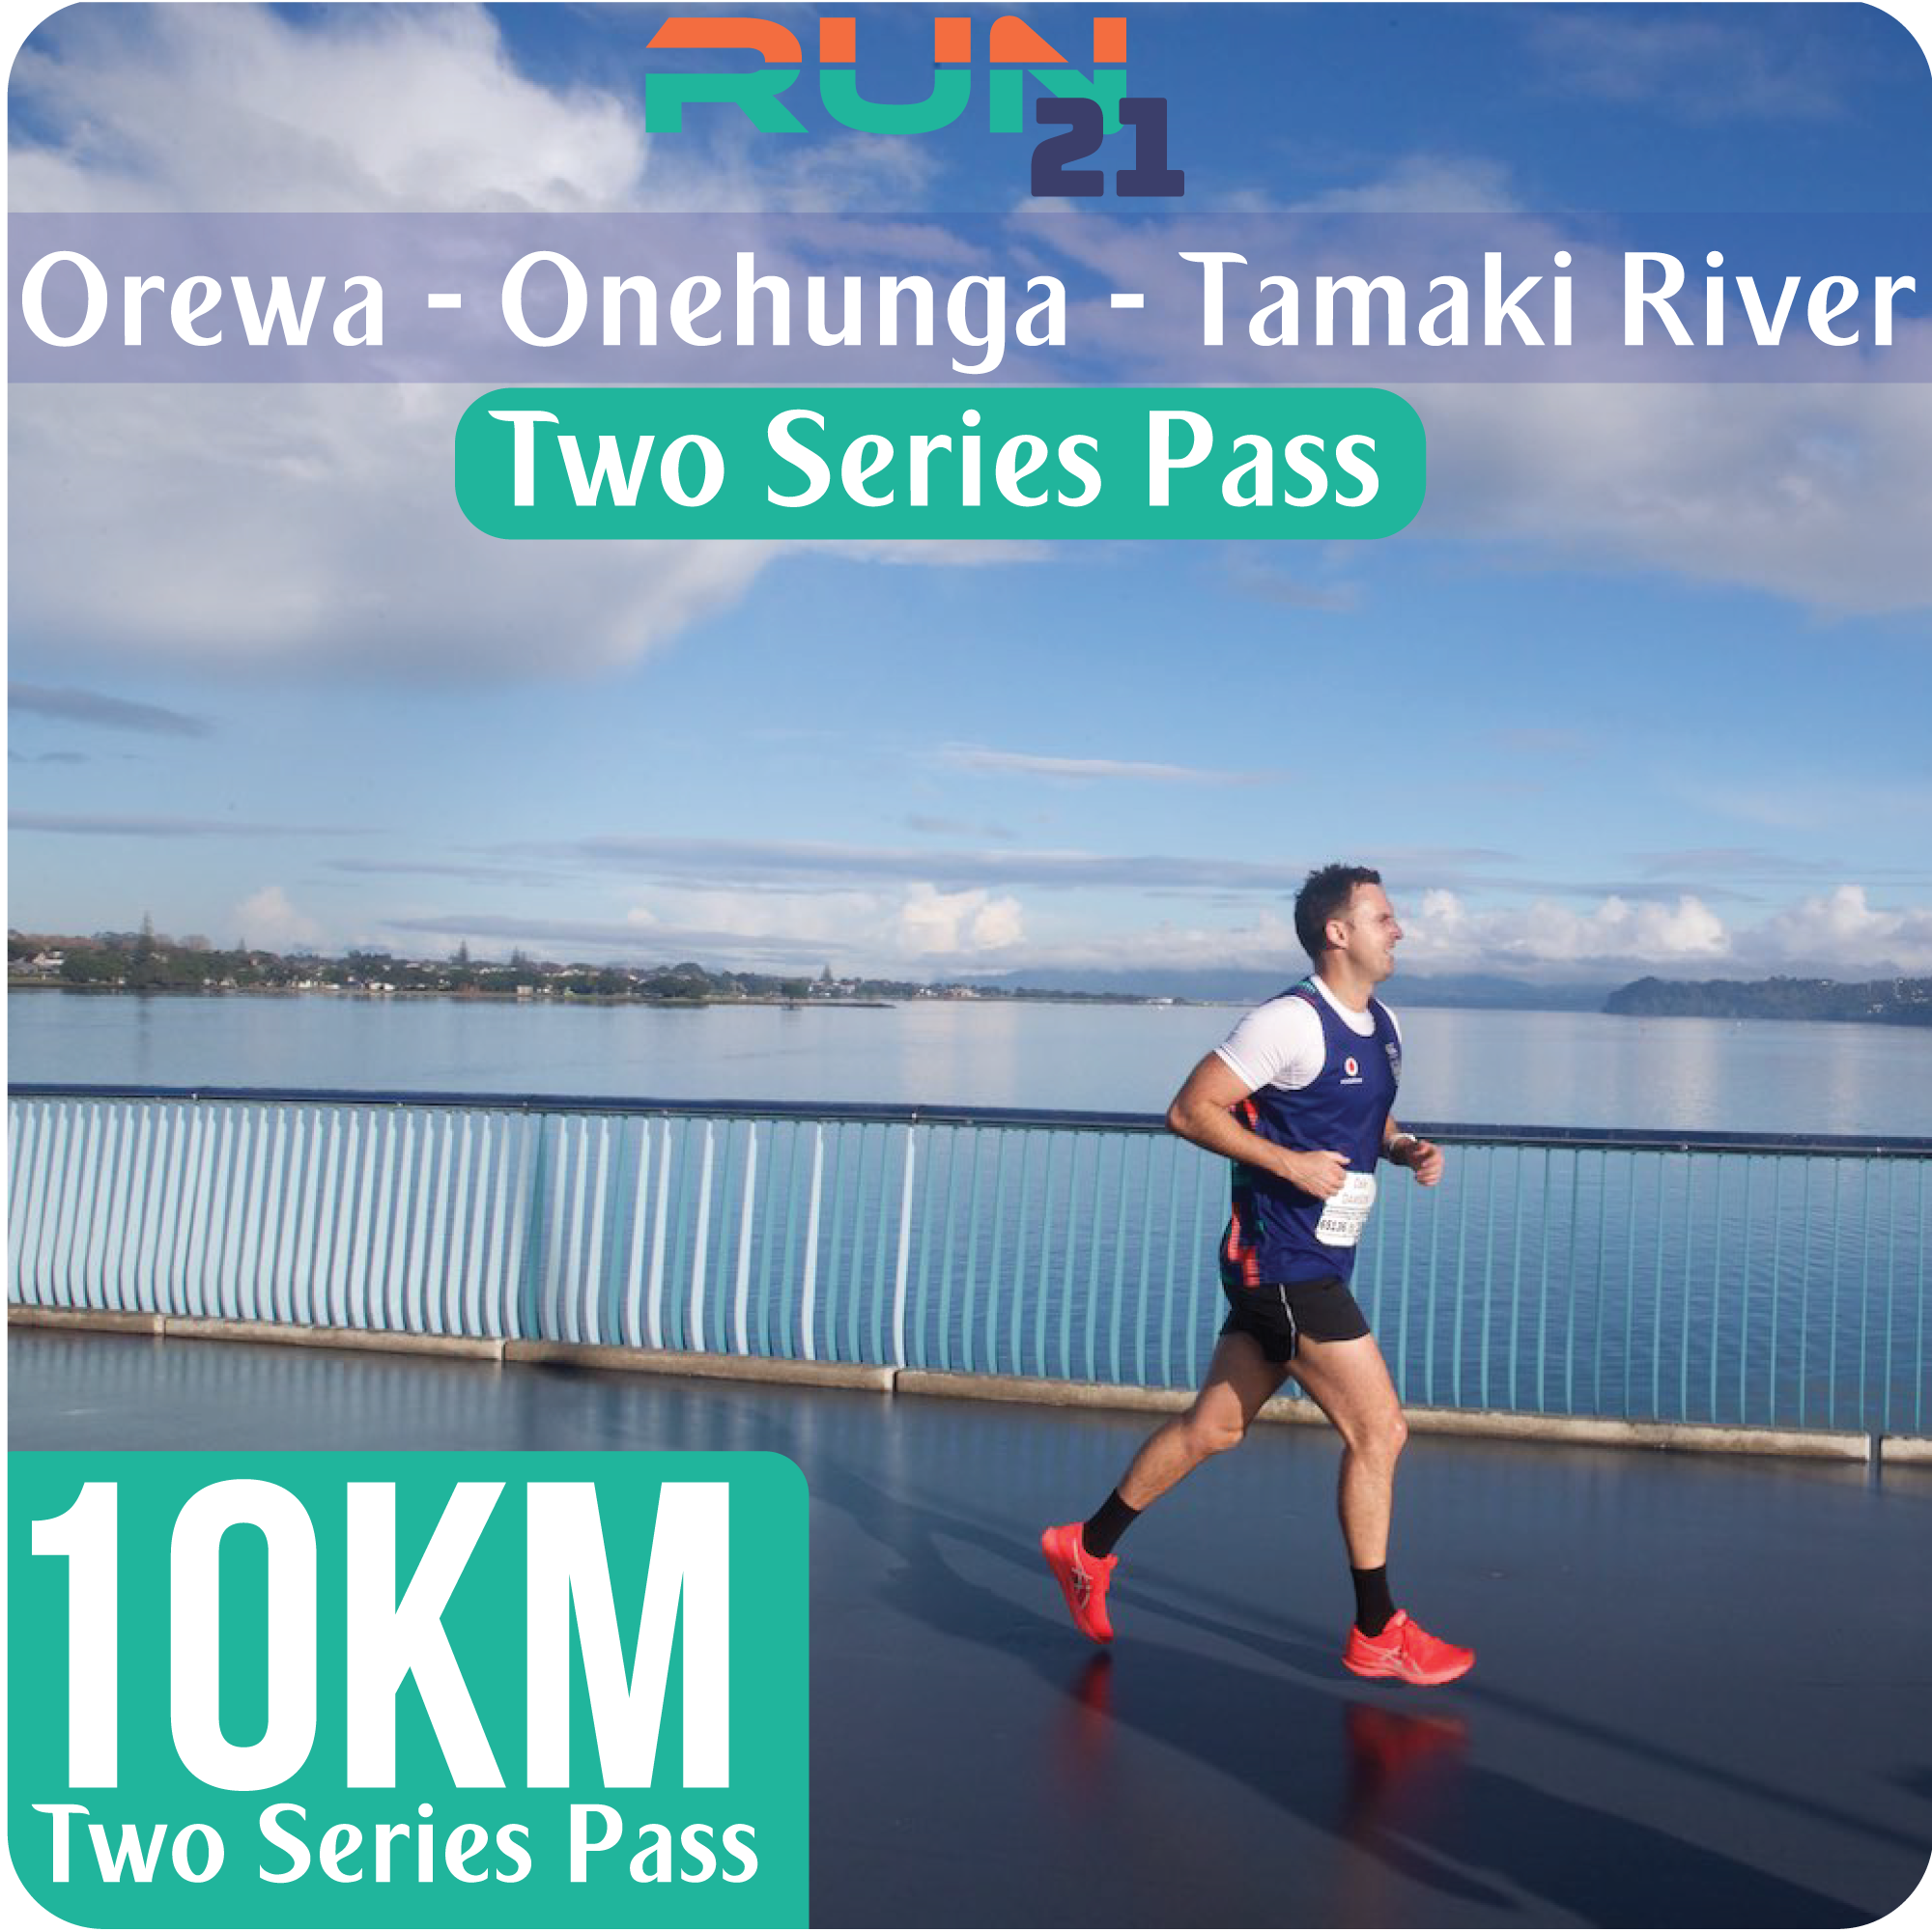 10 KM - Two Series Pass